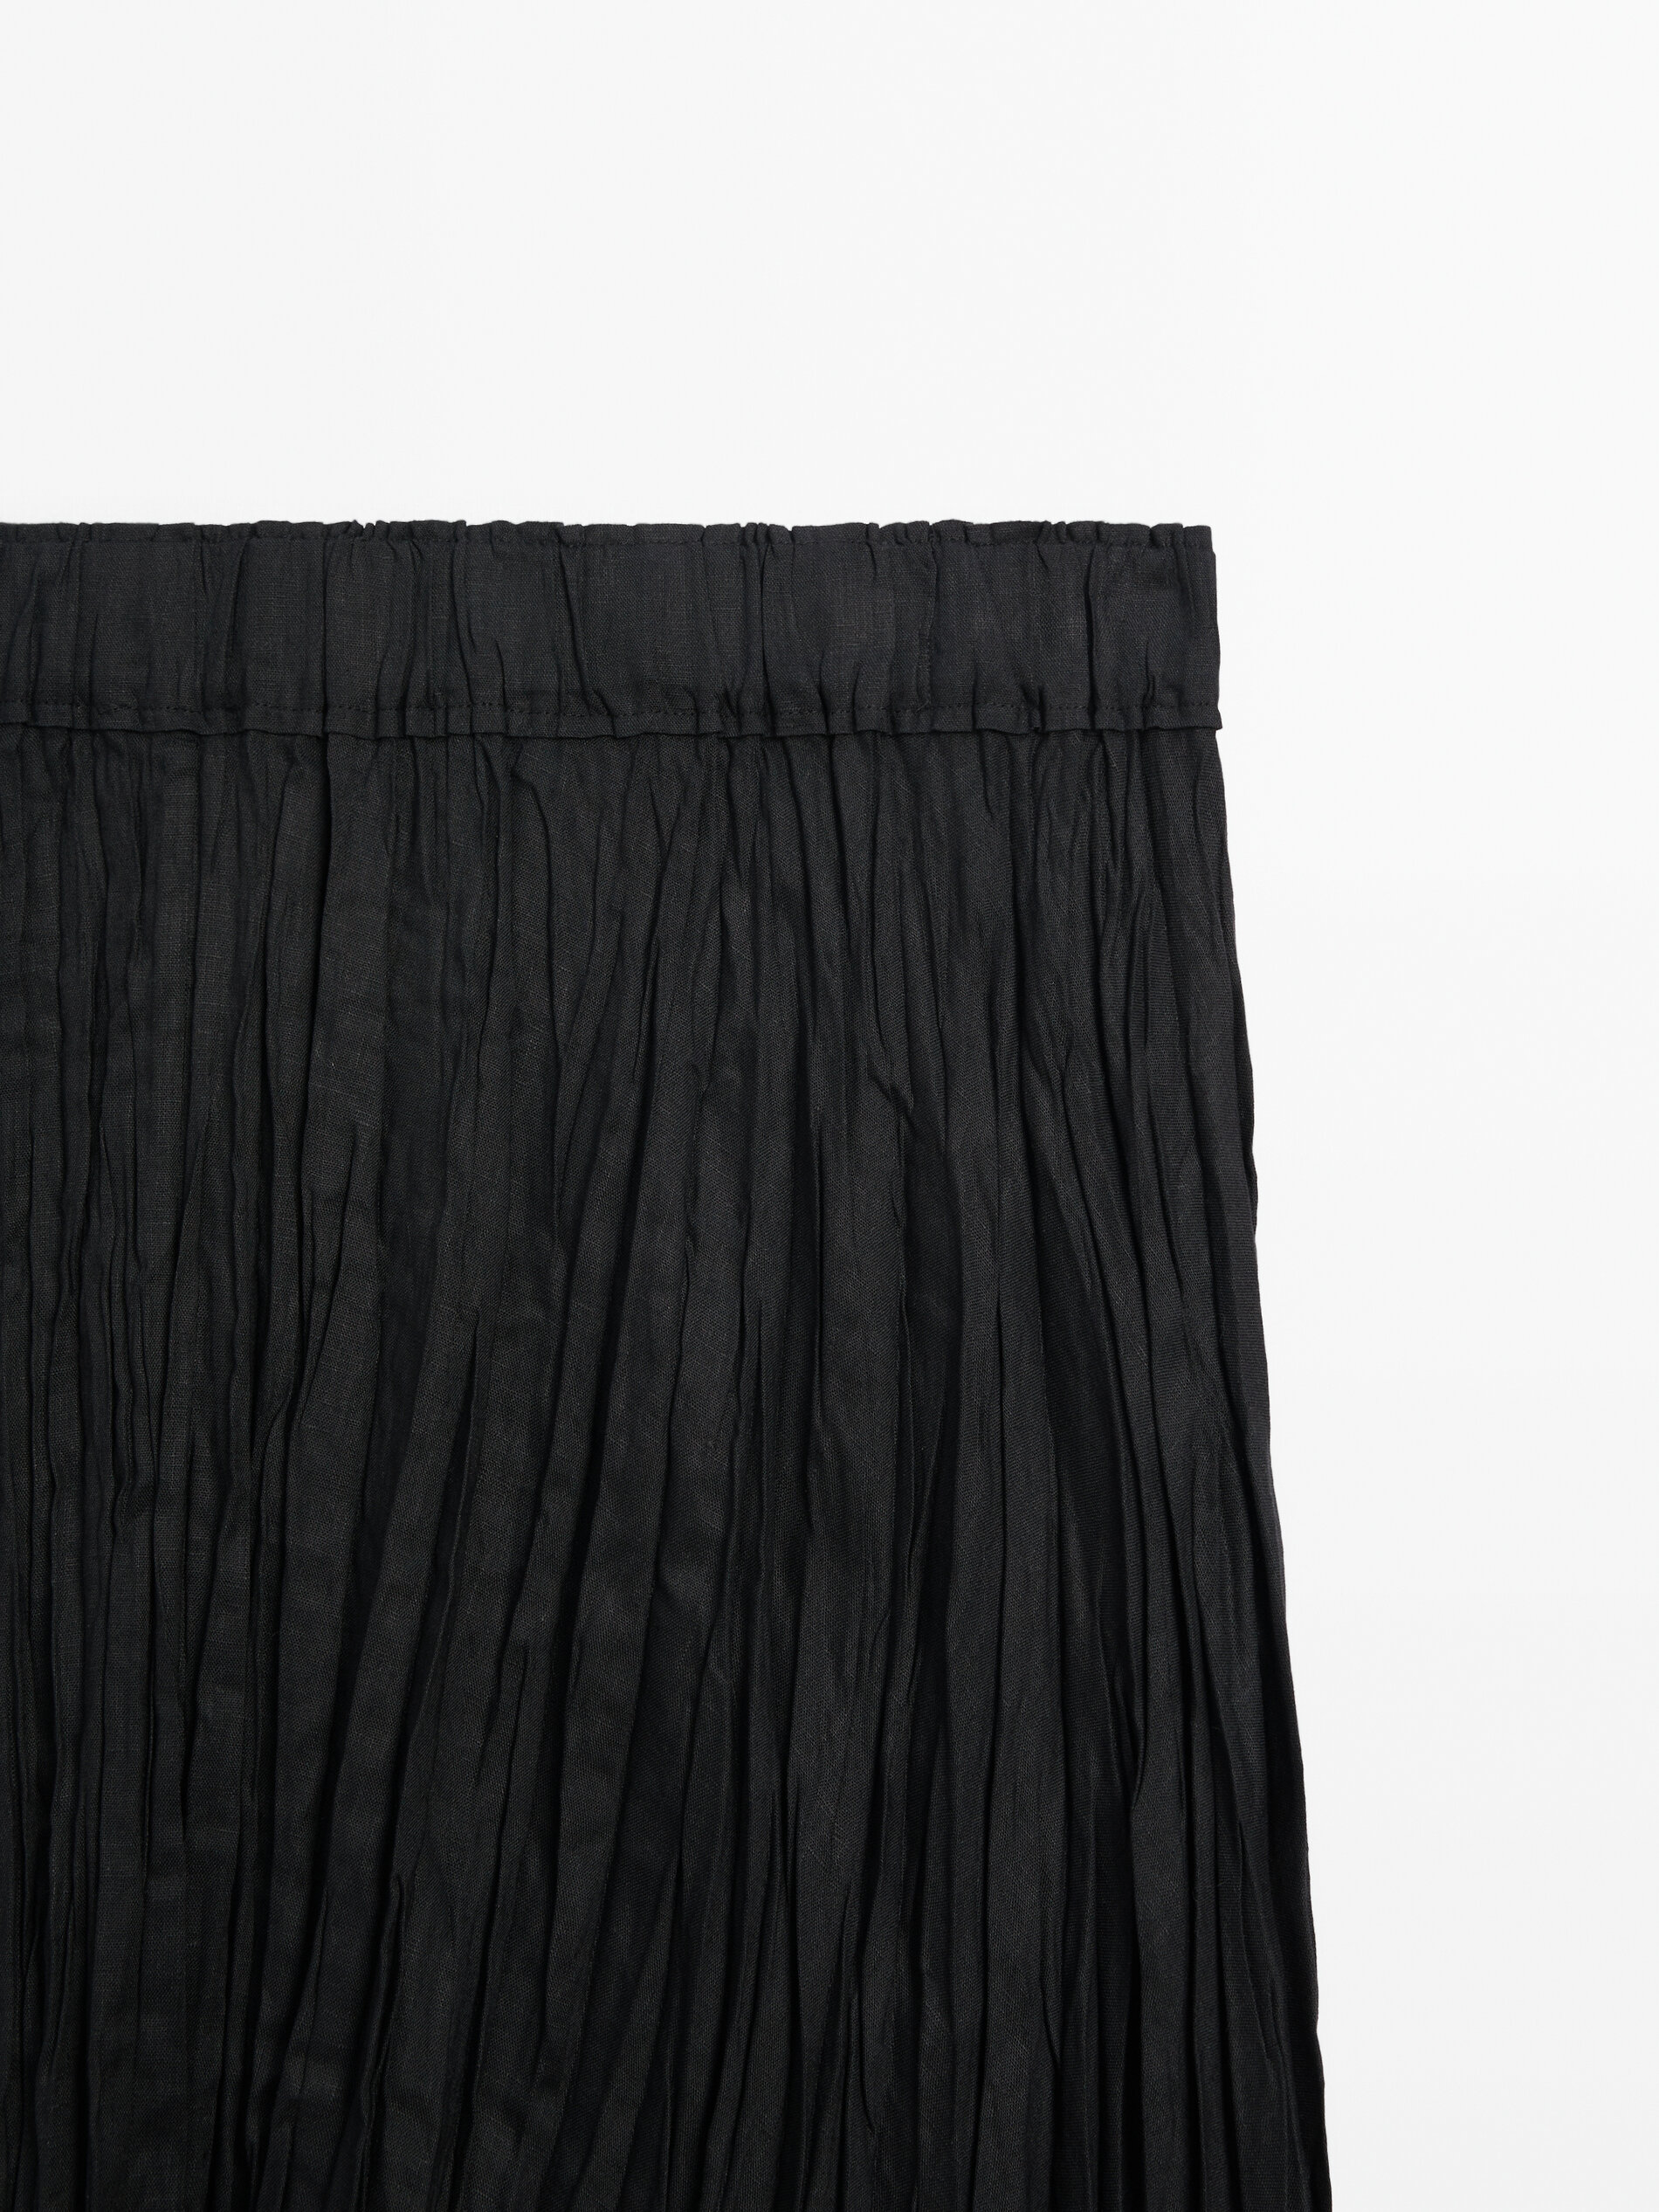 Falda midi negra plisada